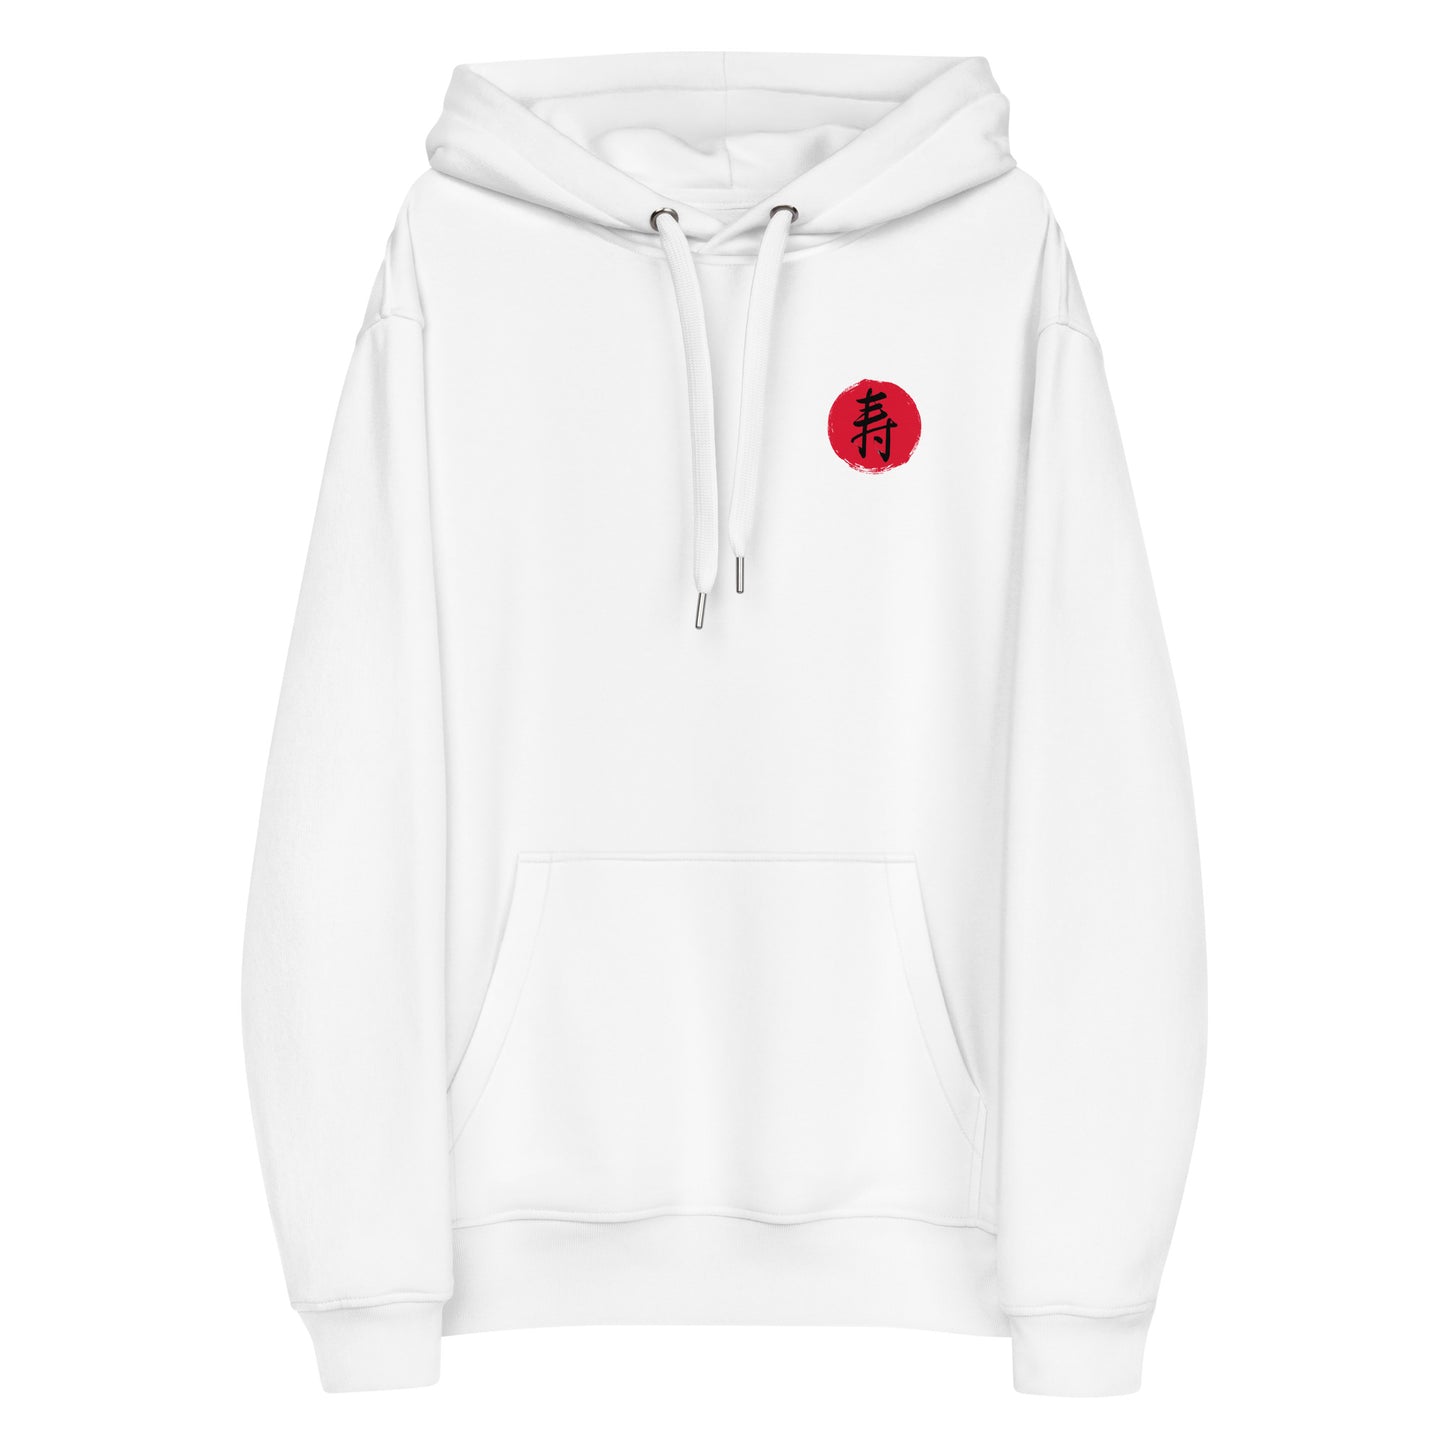 The Hatsuko Limited Edition Premium eco hoodie